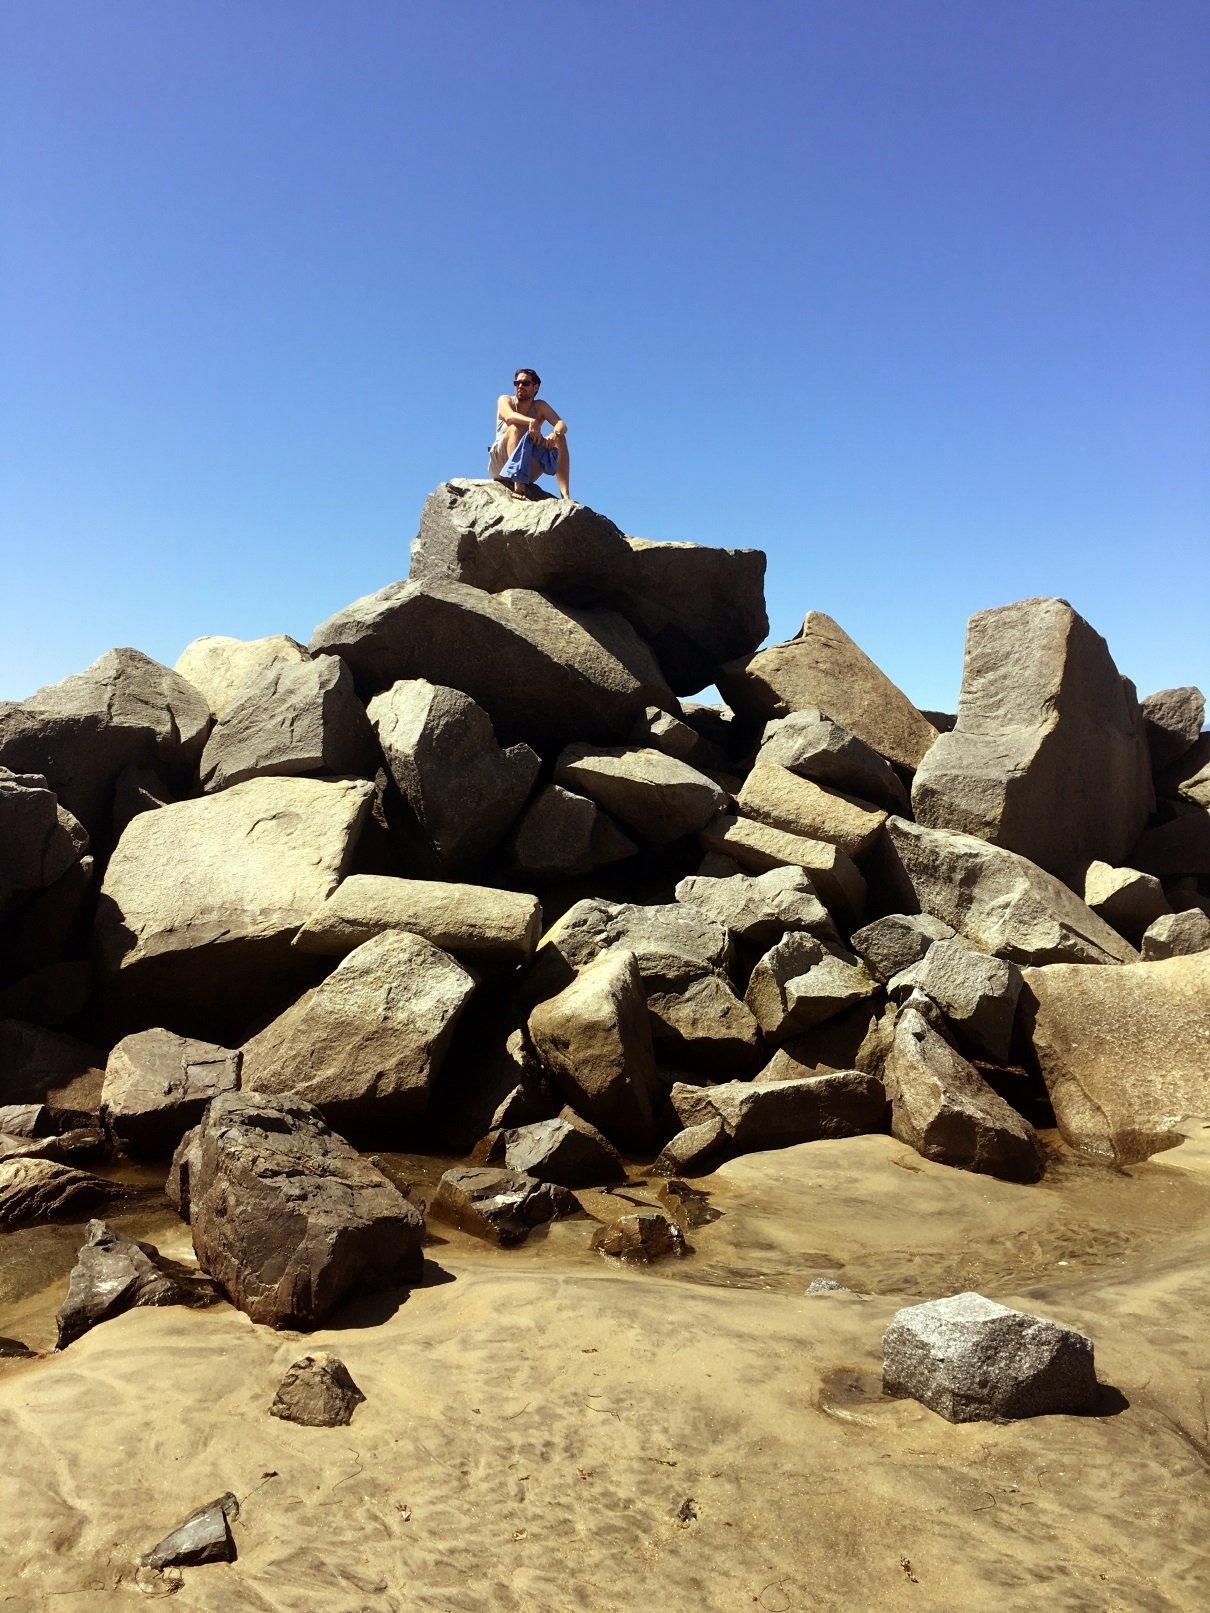 Alex on the rocks